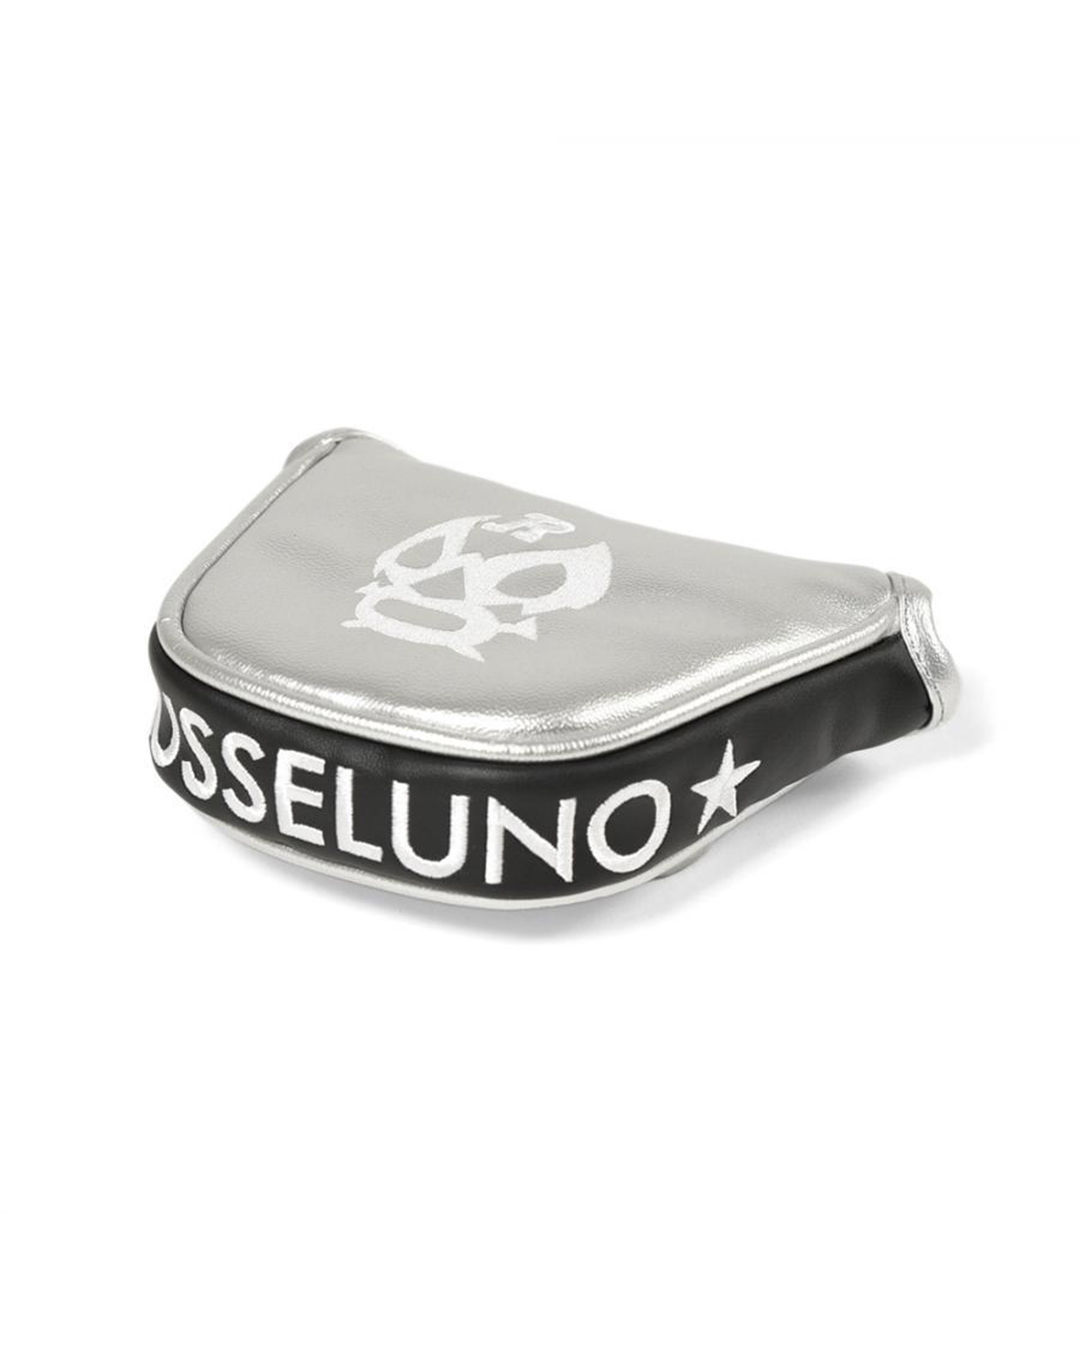 Russeluno ラッセルノ 8.5型 ３点式 パターカバー付★★スタンド